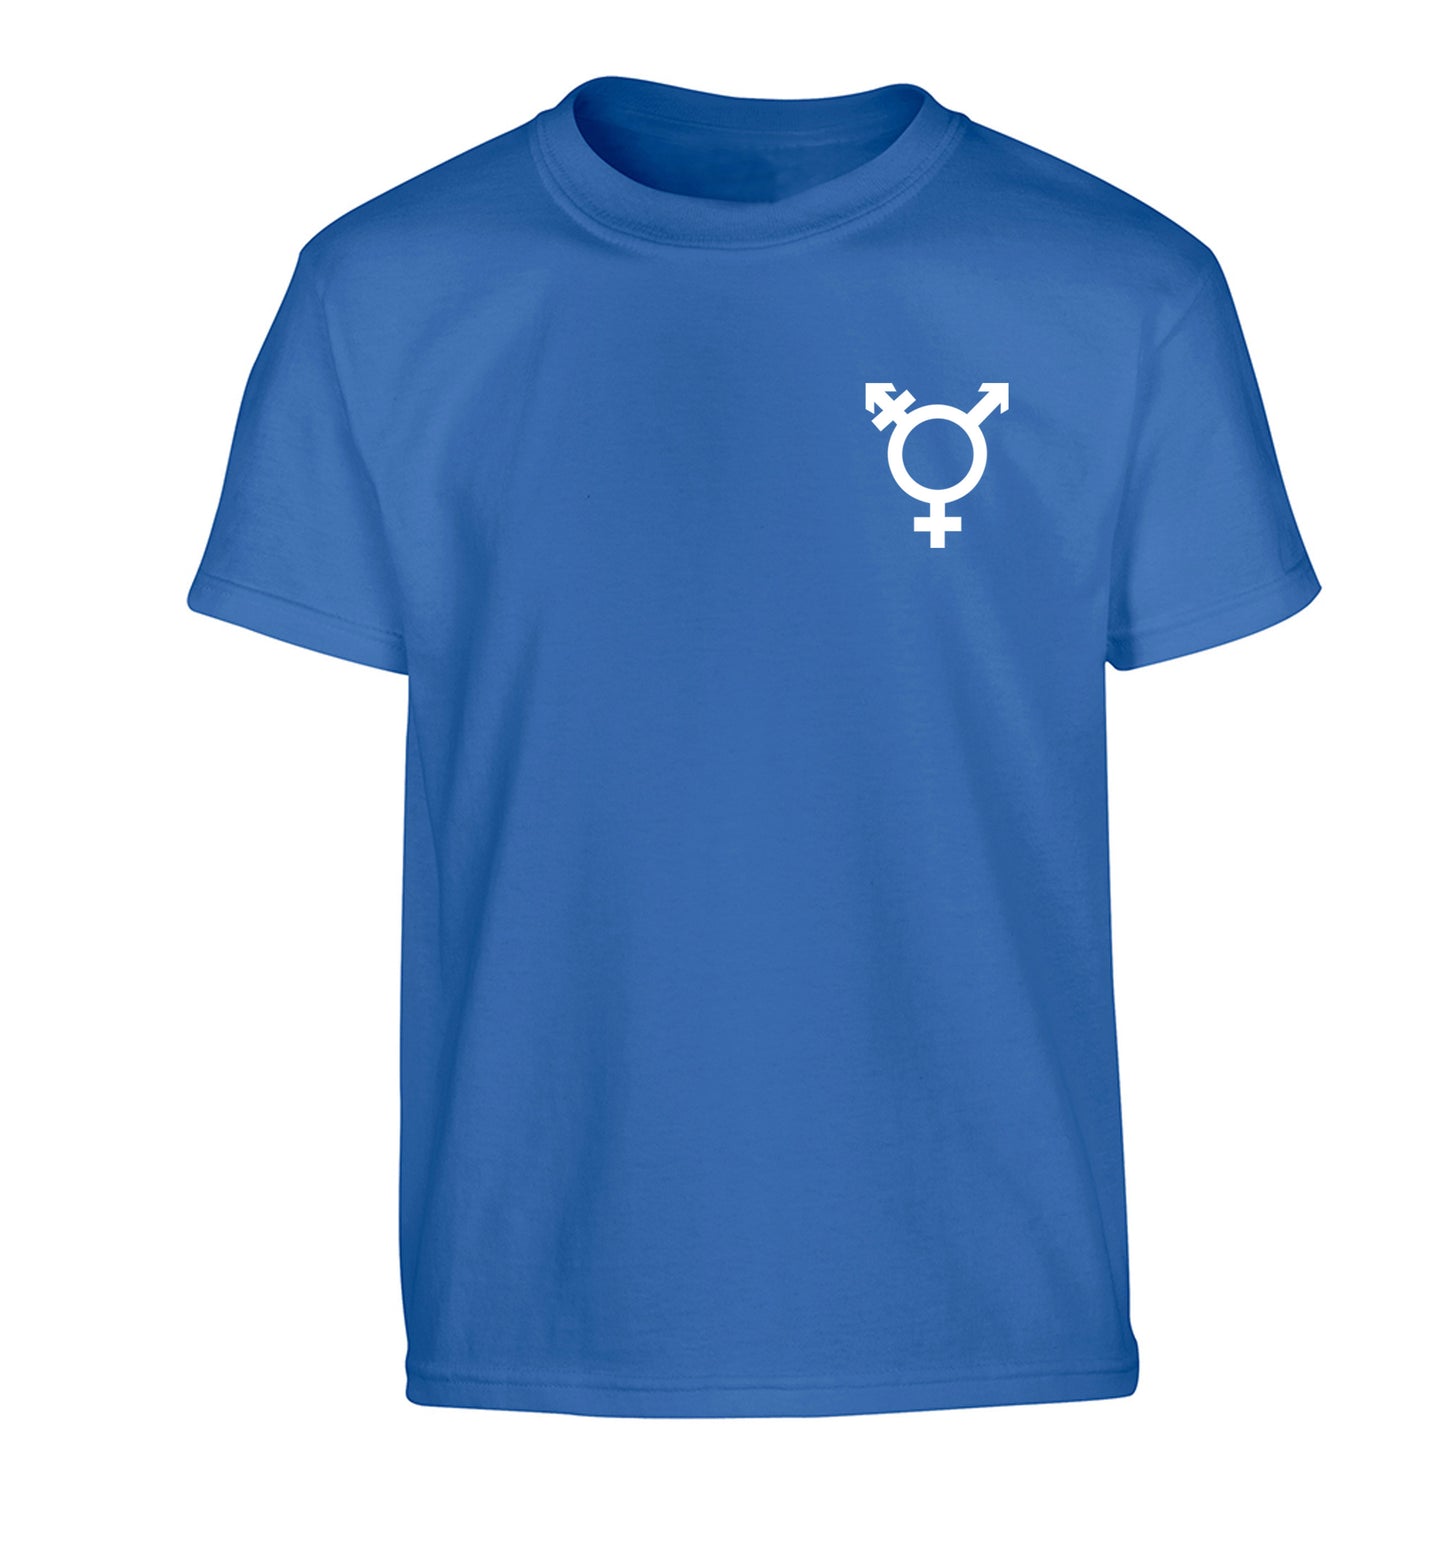 Trans gender symbol pocket Children's blue Tshirt 12-14 Years